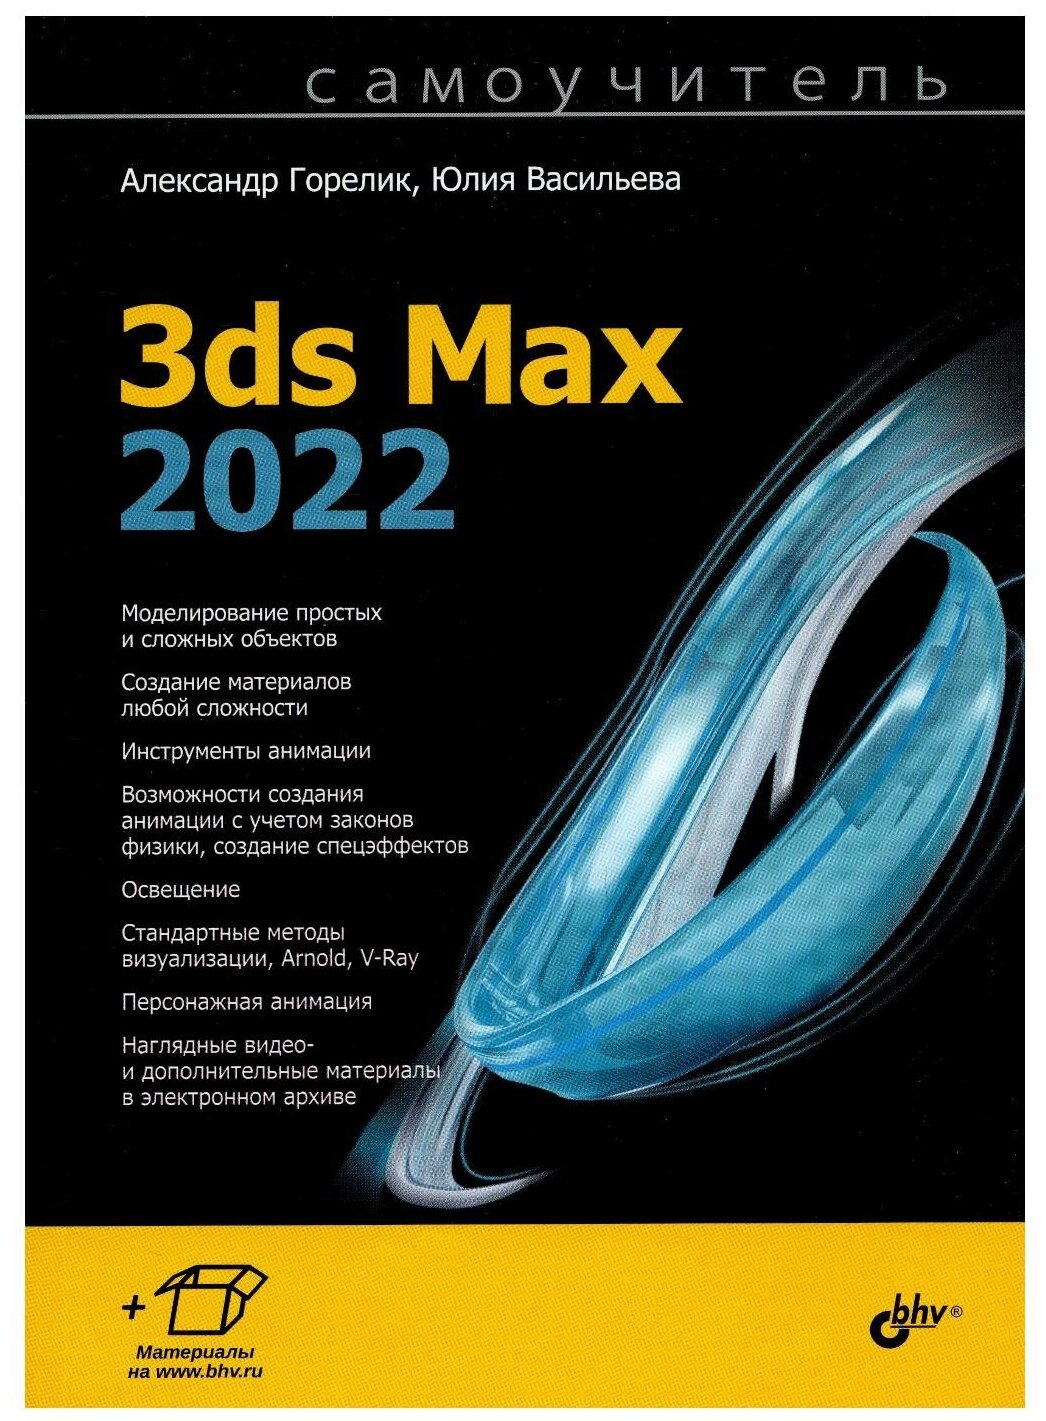 3ds Max 2022 (Горелик Александр Гиршевич, Васильева Юлия Дмитриевна (соавтор)) - фото №1